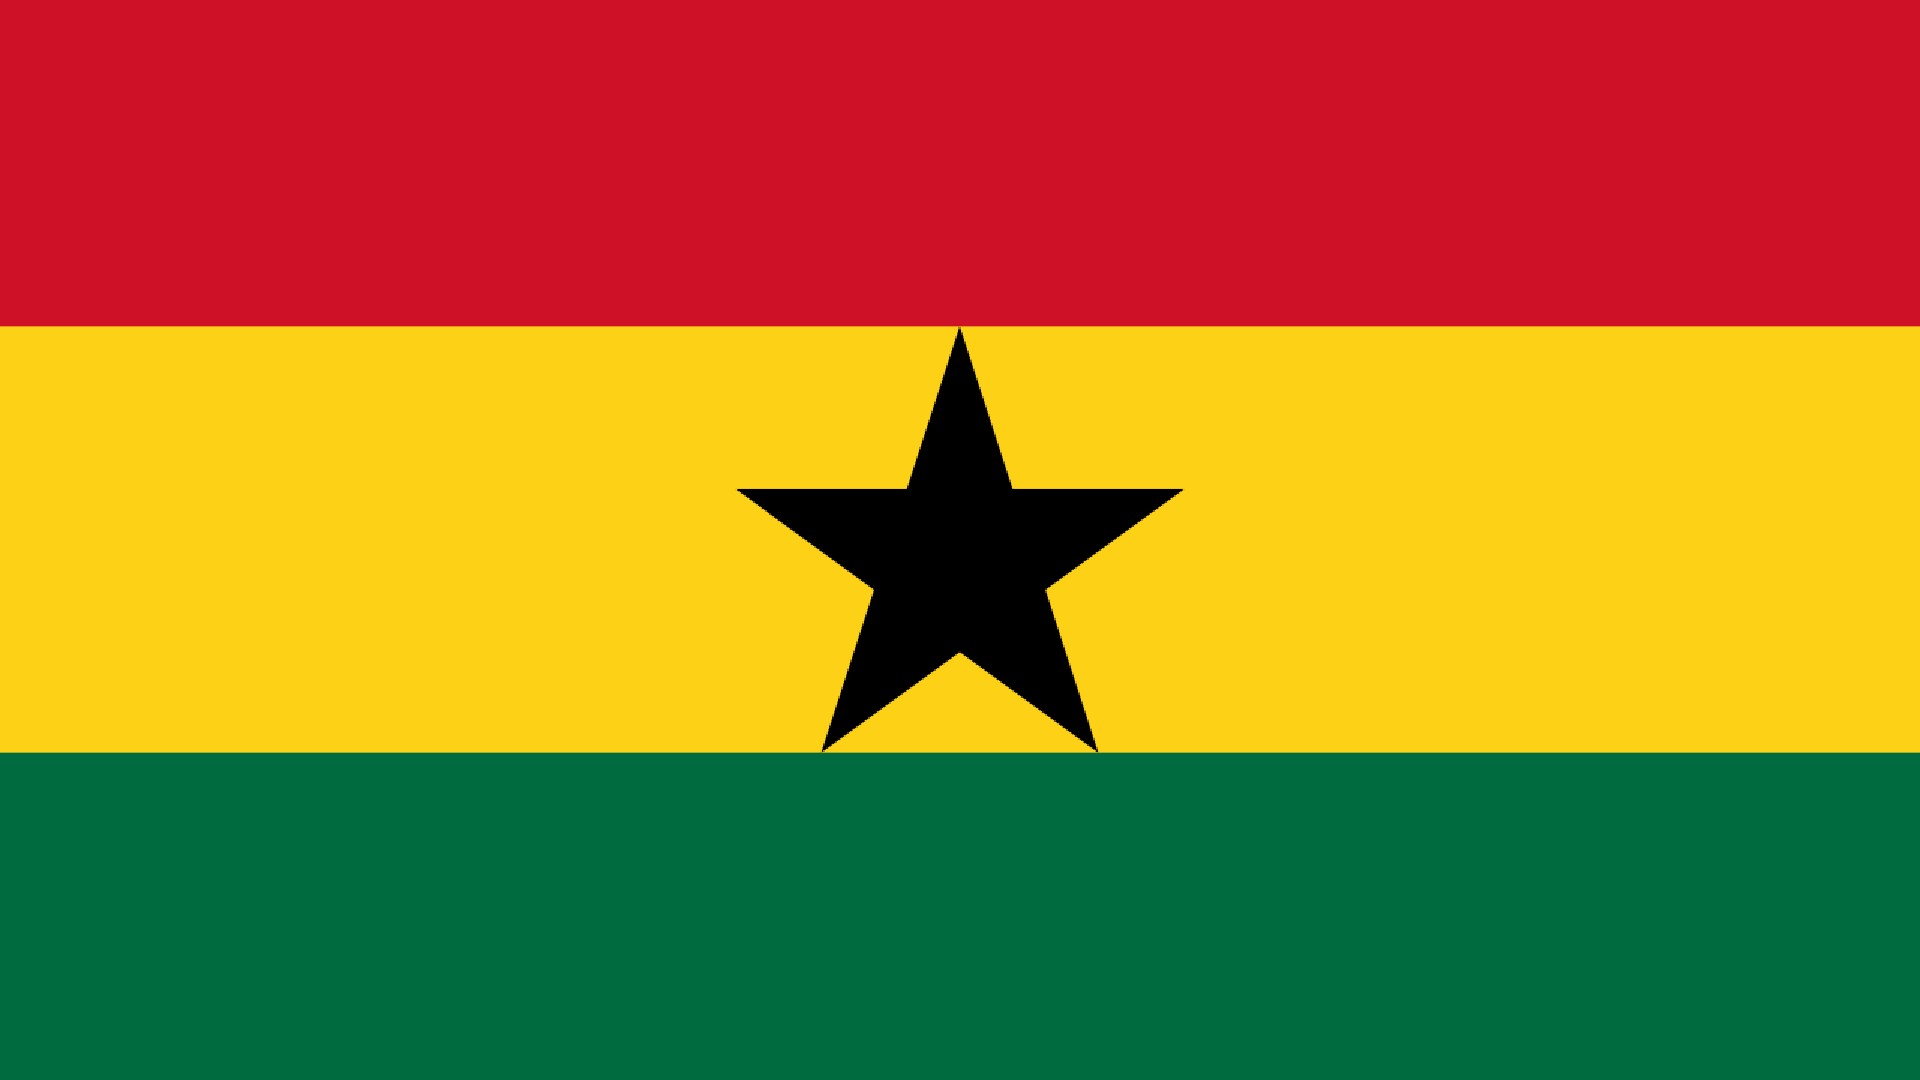 An image of the flag of Ghana